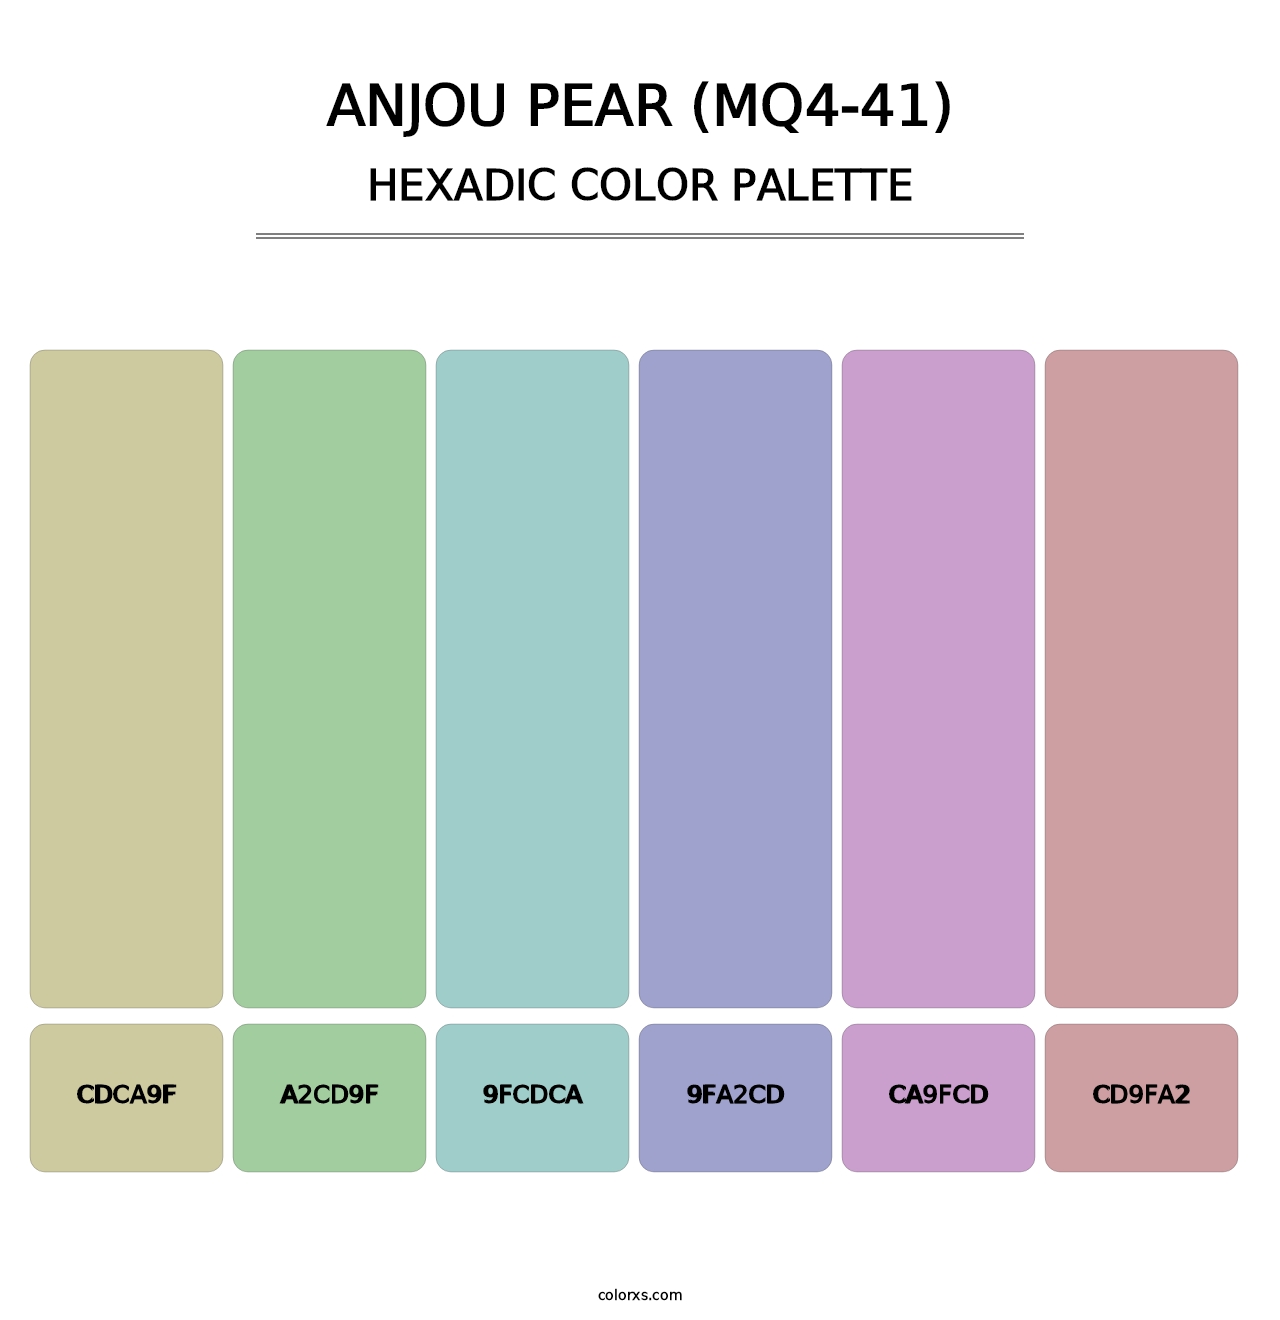 Anjou Pear (MQ4-41) - Hexadic Color Palette